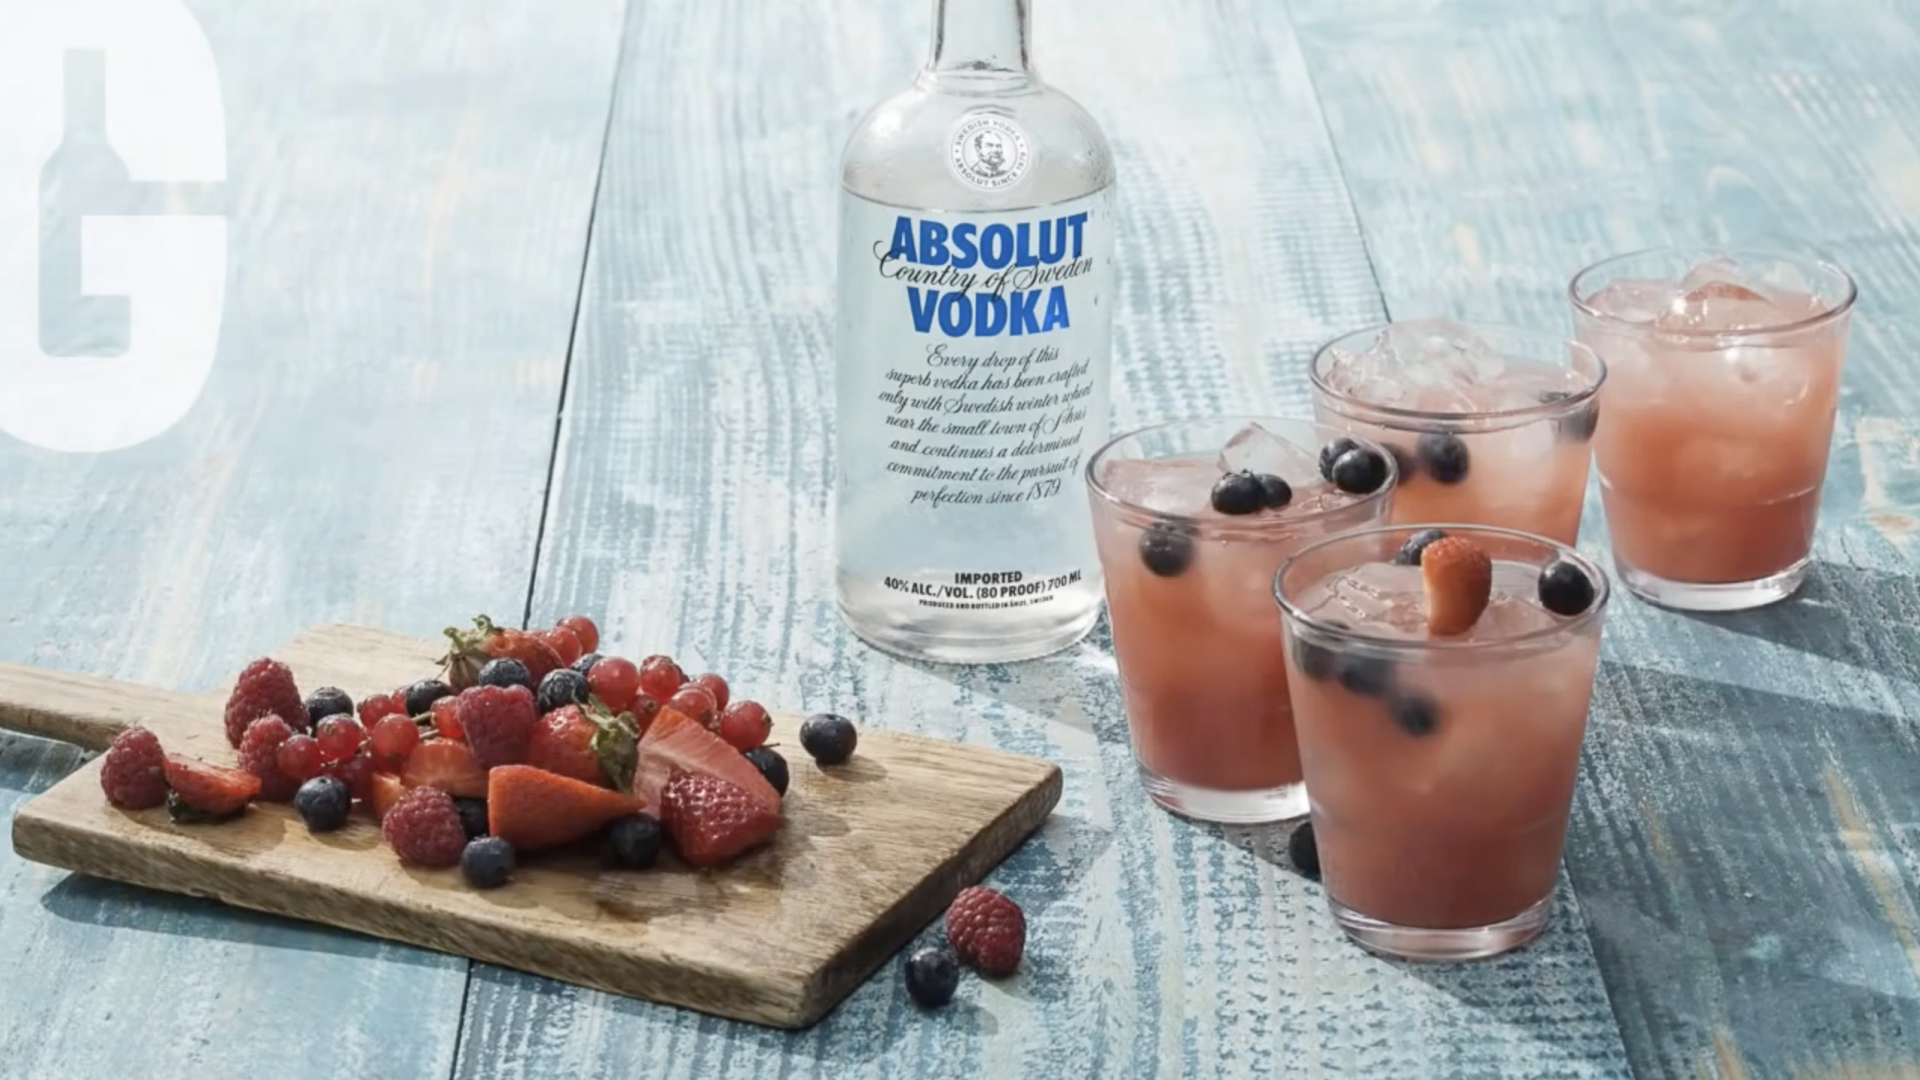 Claartje Lindhout - Absolut vodka & Cranberrysap